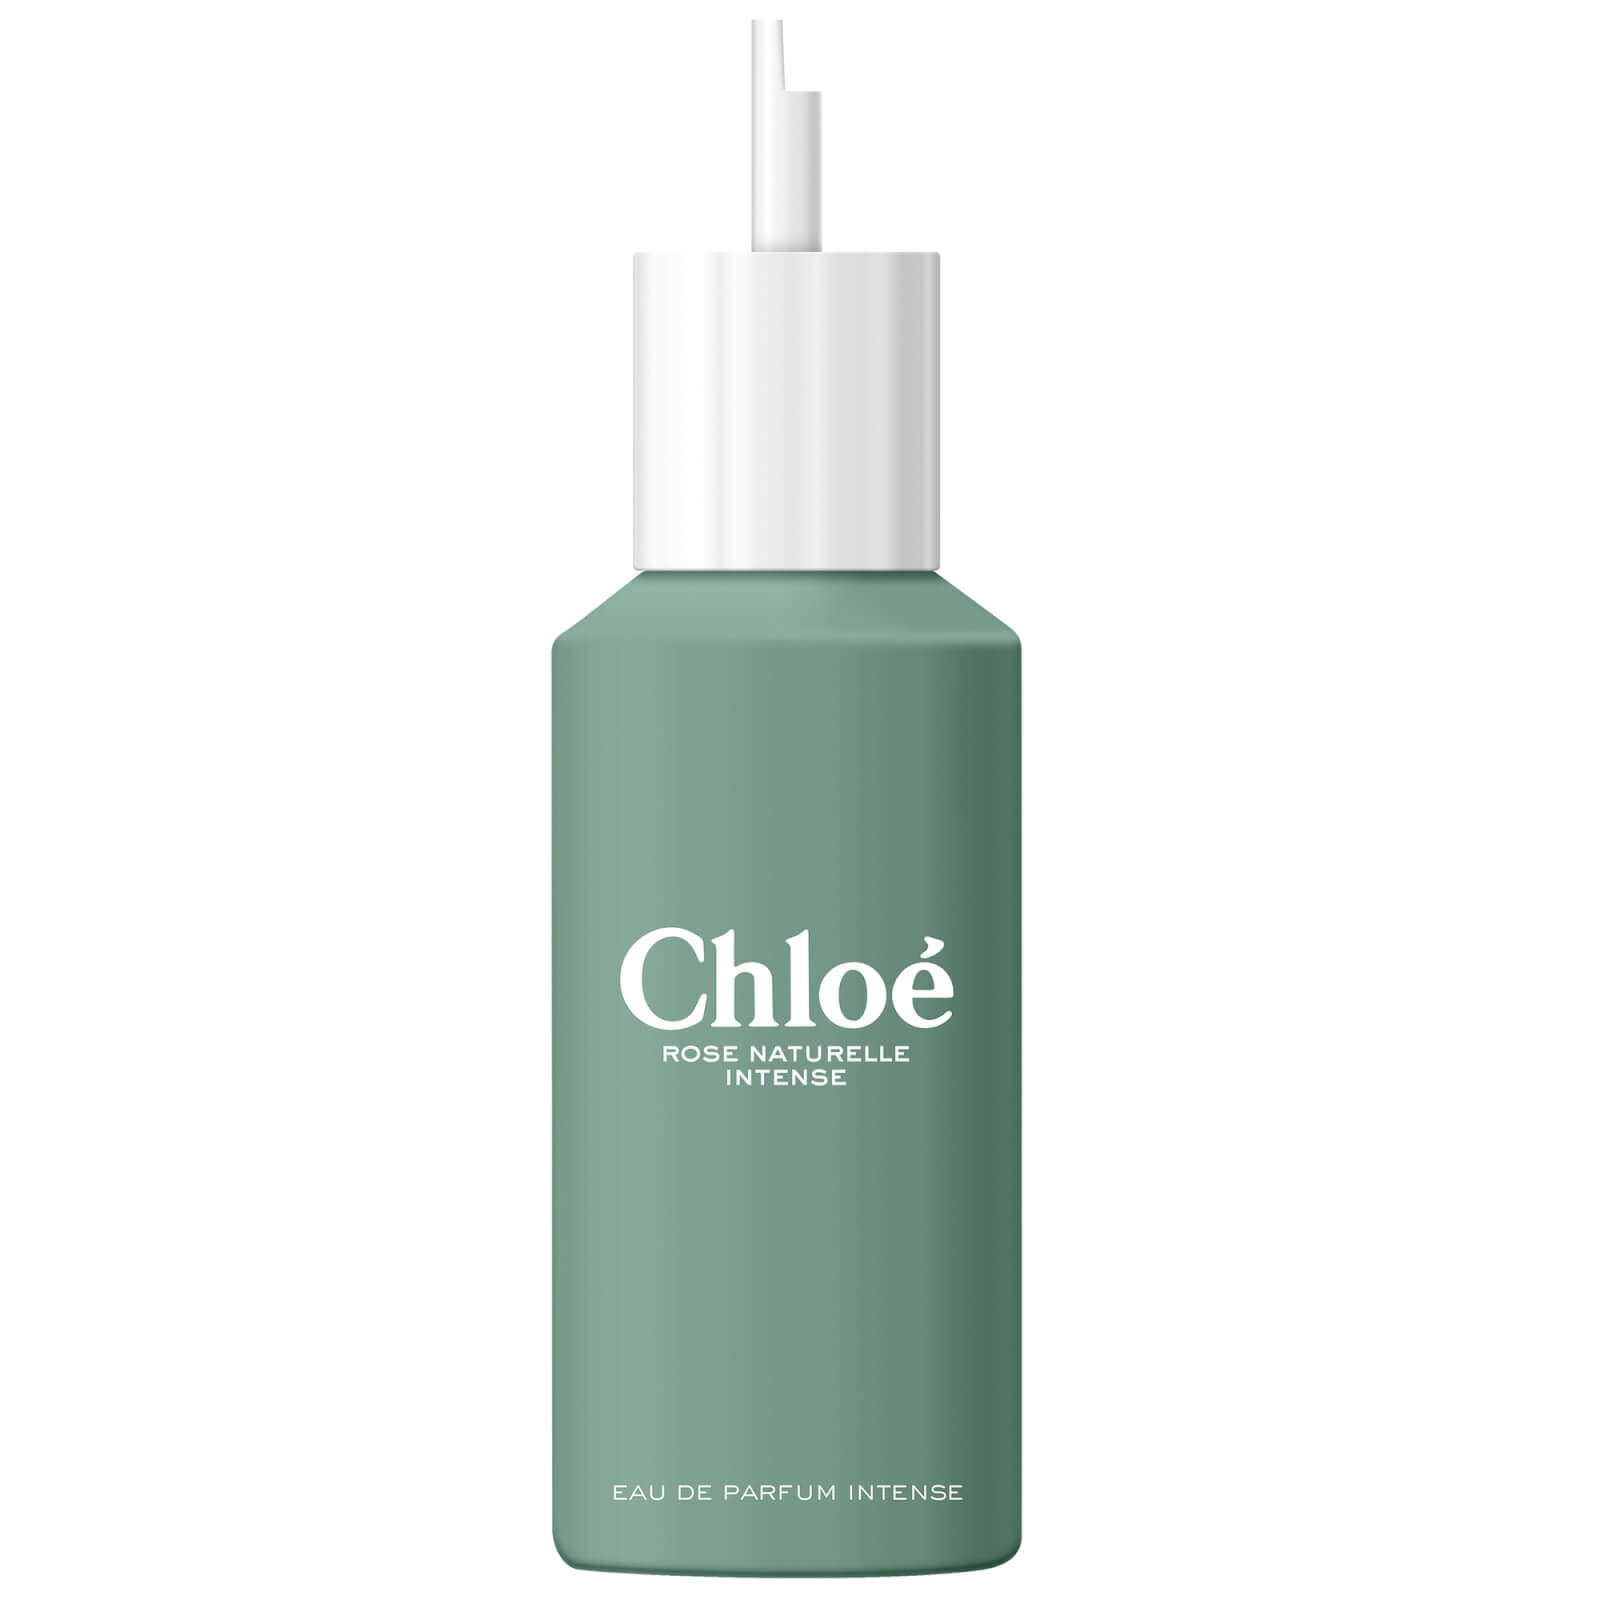 Image of Chloé Rose Naturelle Intense Eau de Parfum Profumo Refill 150ml